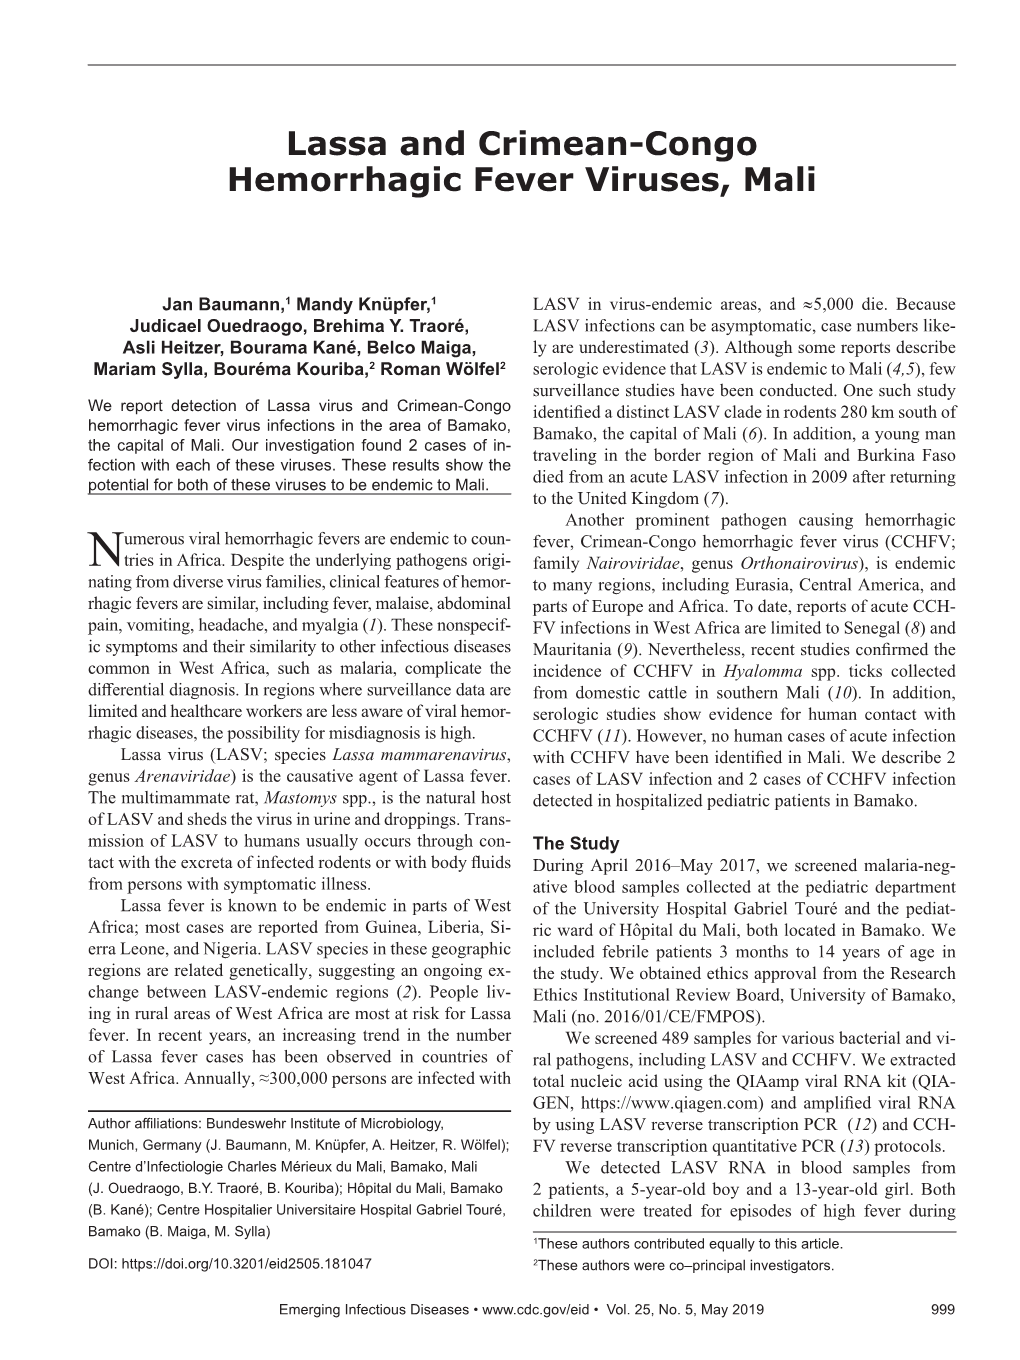 Lassa and Crimean-Congo Hemorrhagic Fever Viruses, Mali